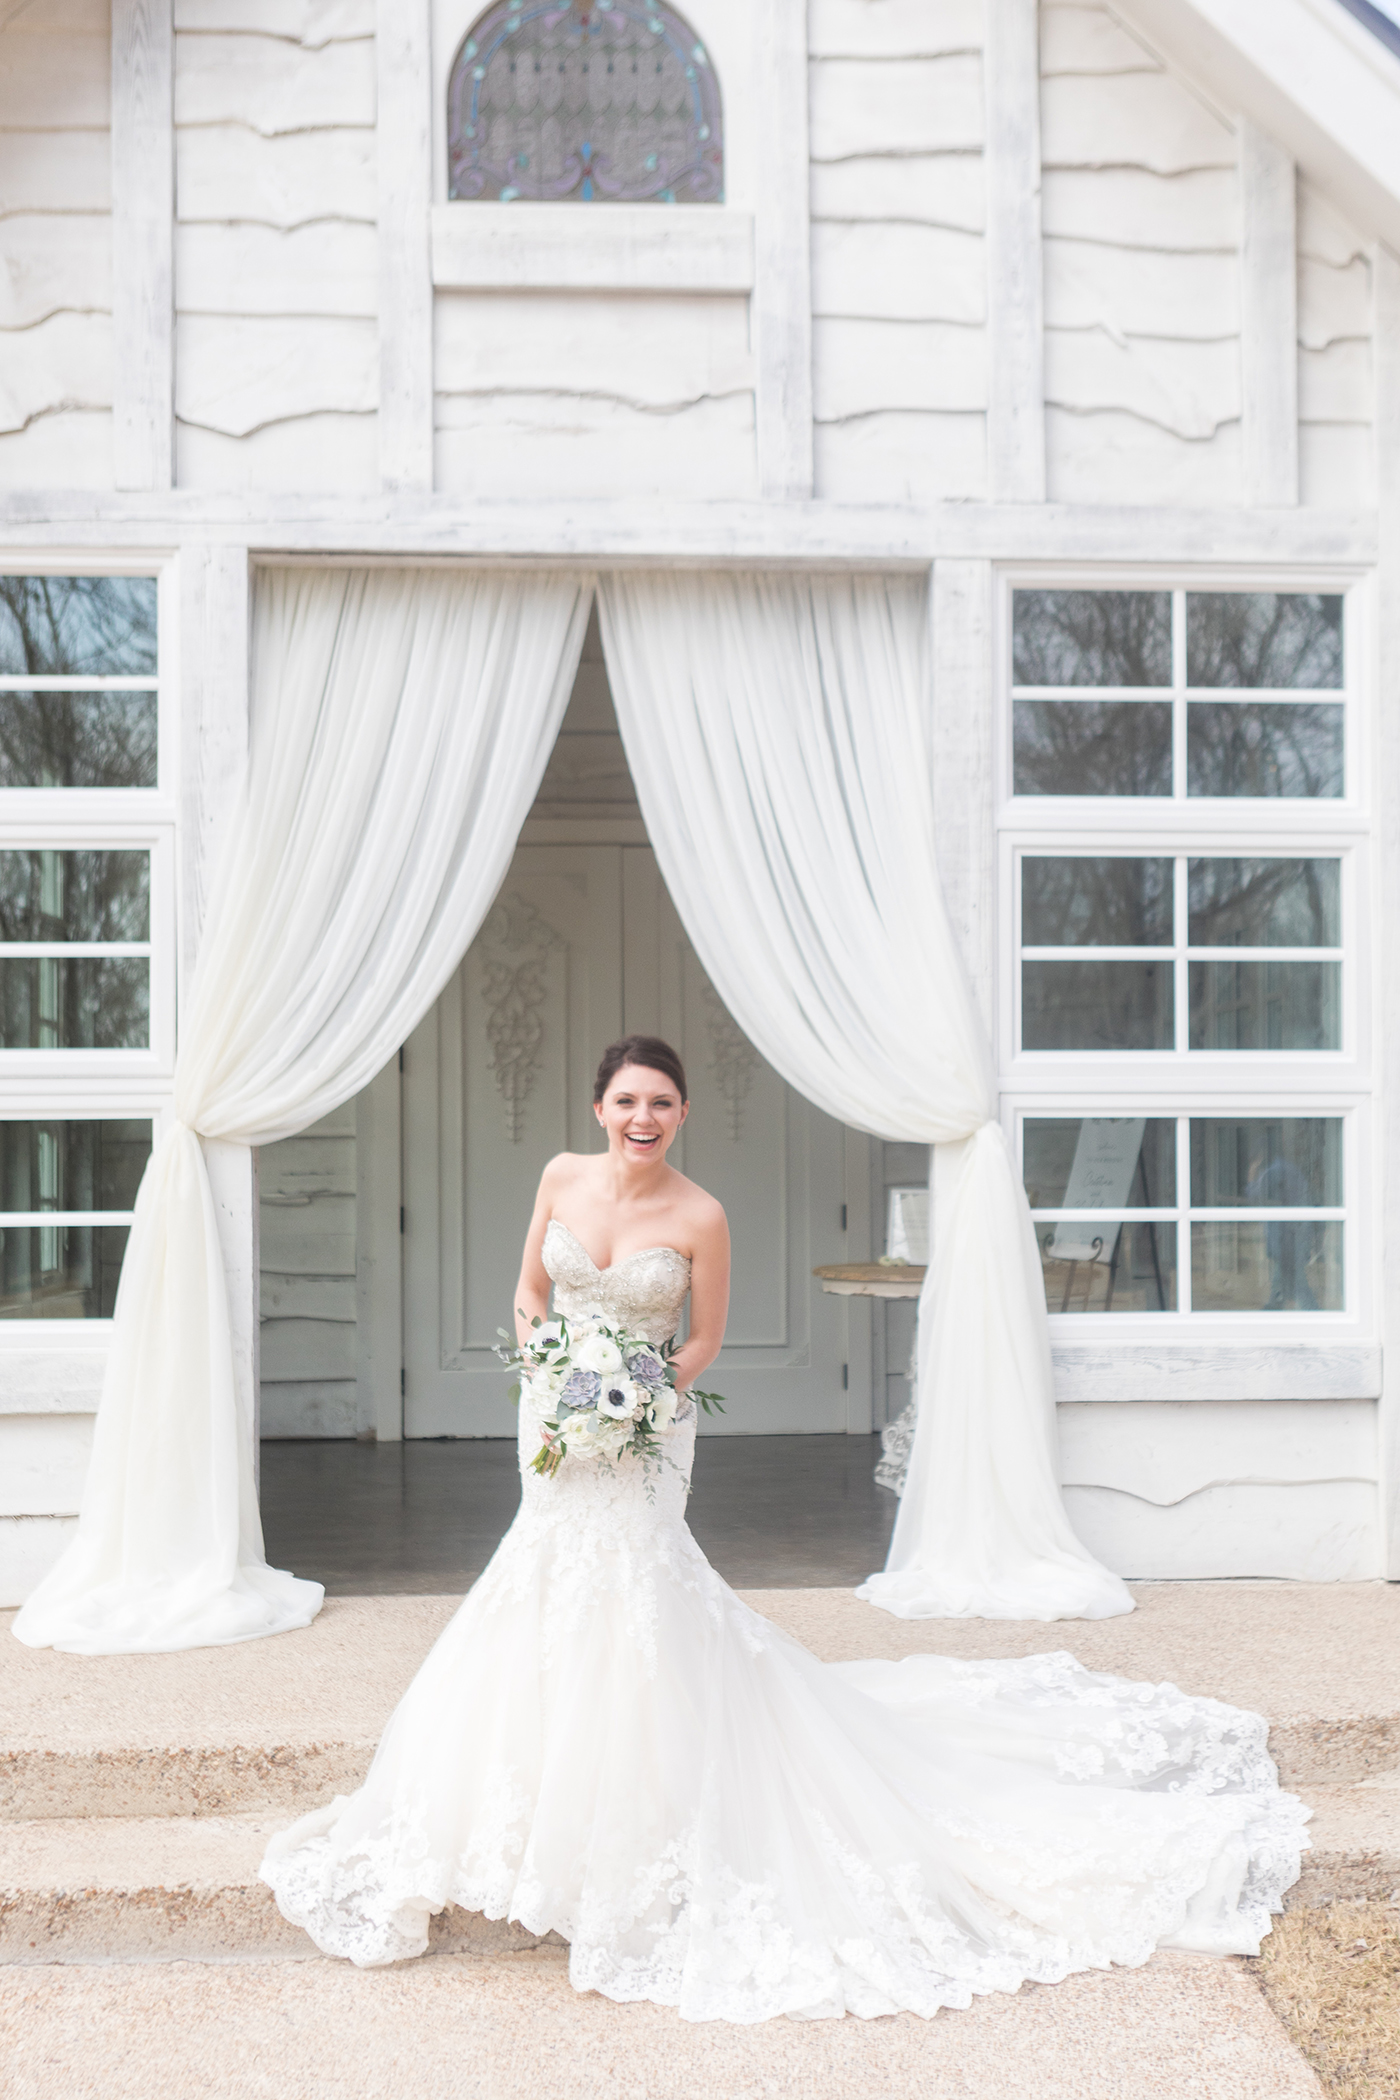 Texas Wedding Planning: A Stylish Soiree | Cristina + Nick's Wedding Day